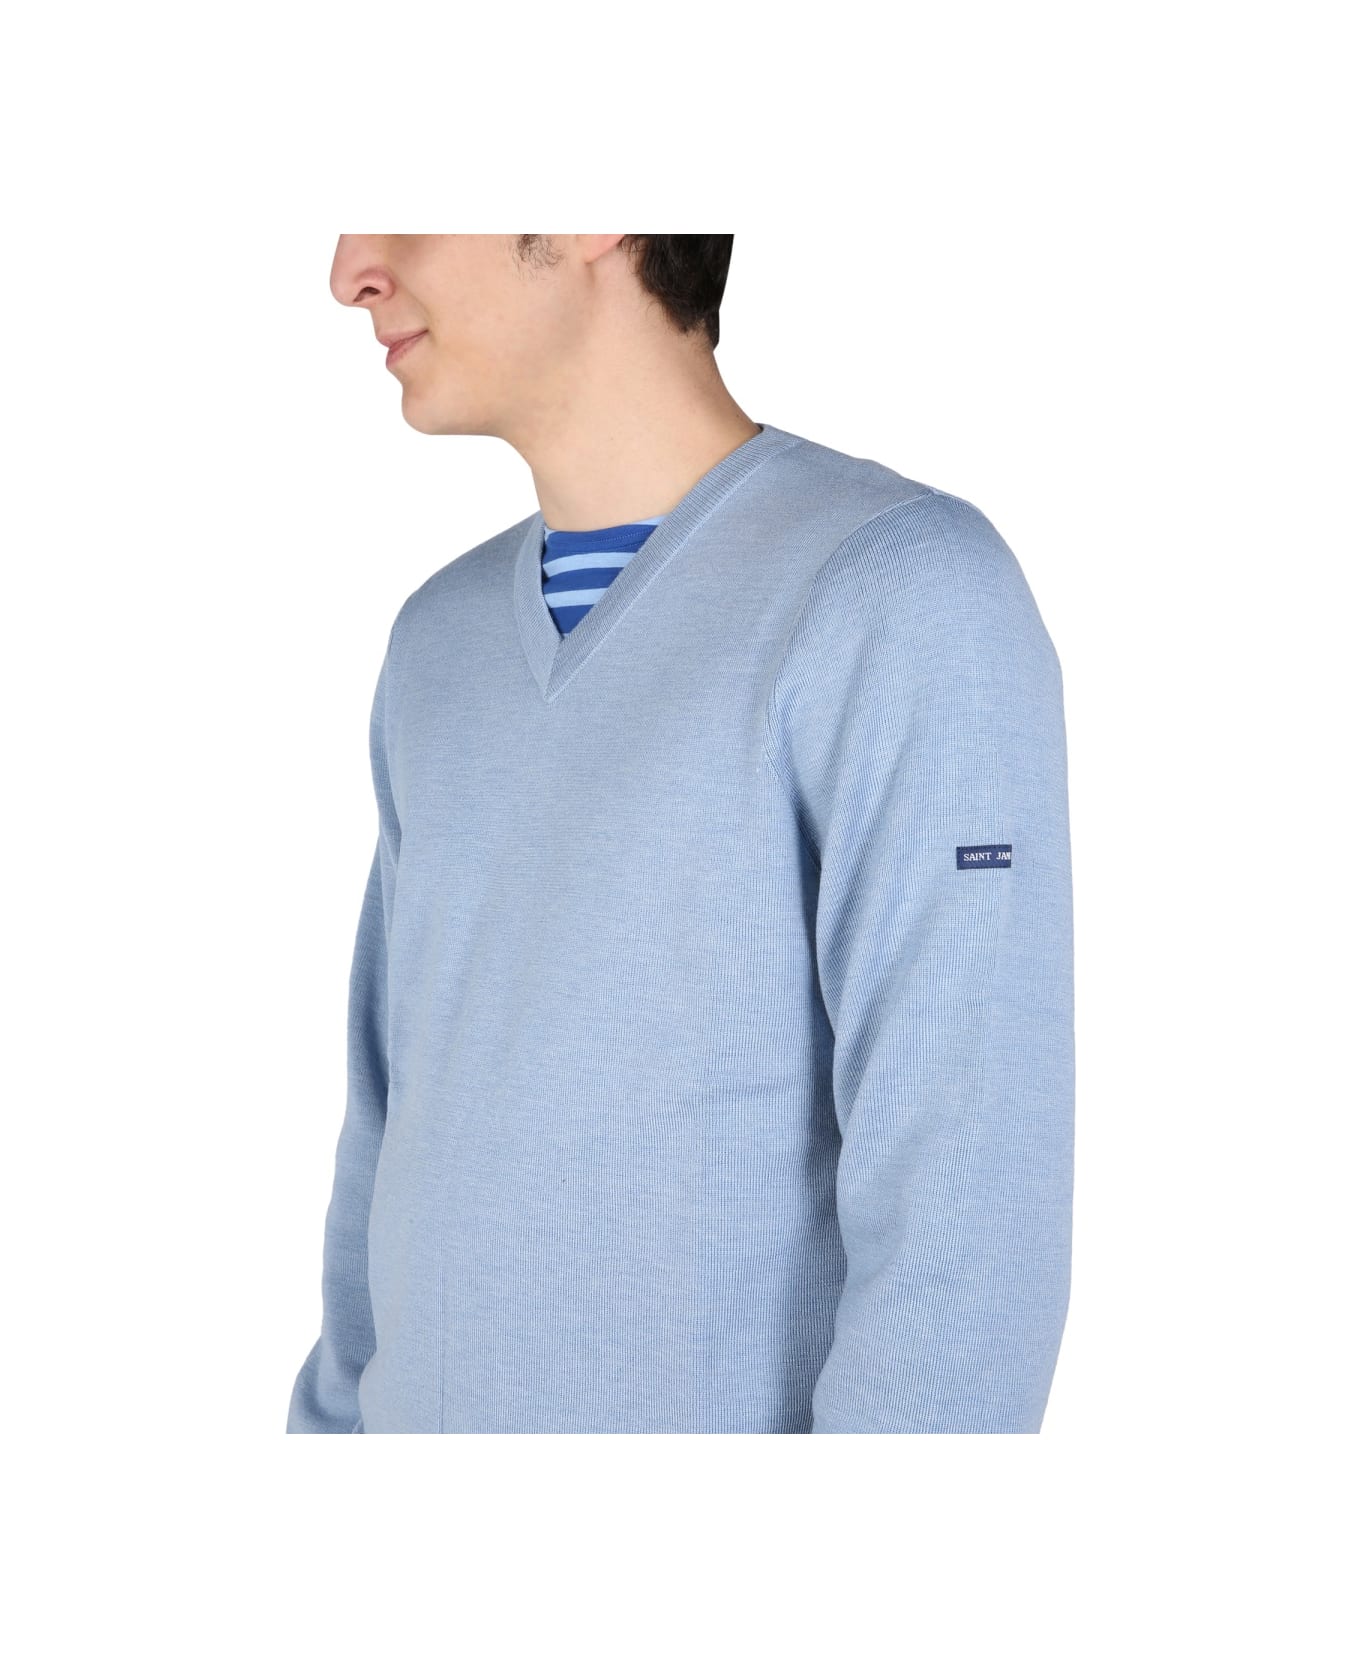 Saint James V-neck Sweater - BLUE